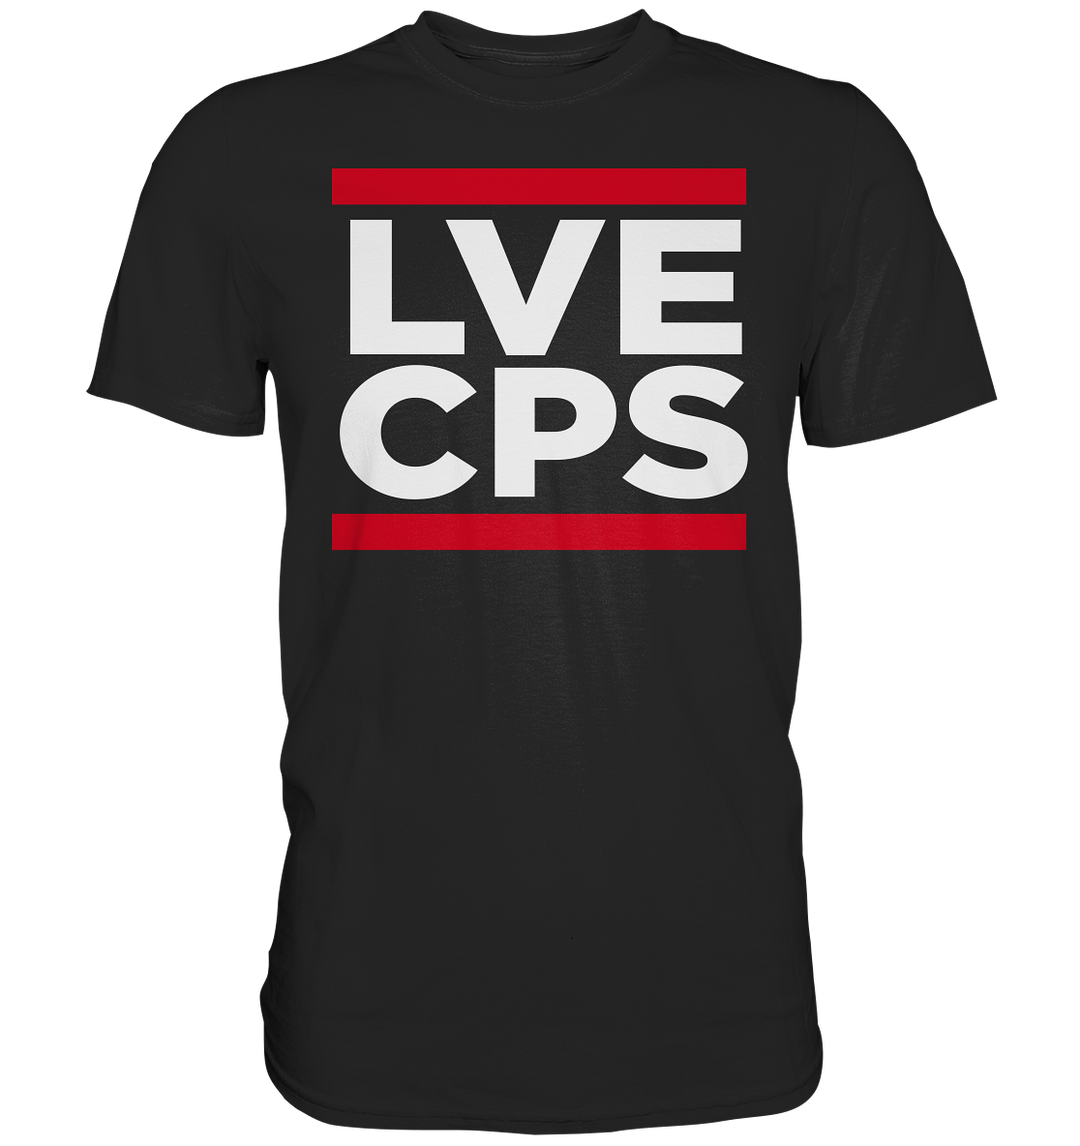 "LVE CPS" - Premium Shirt